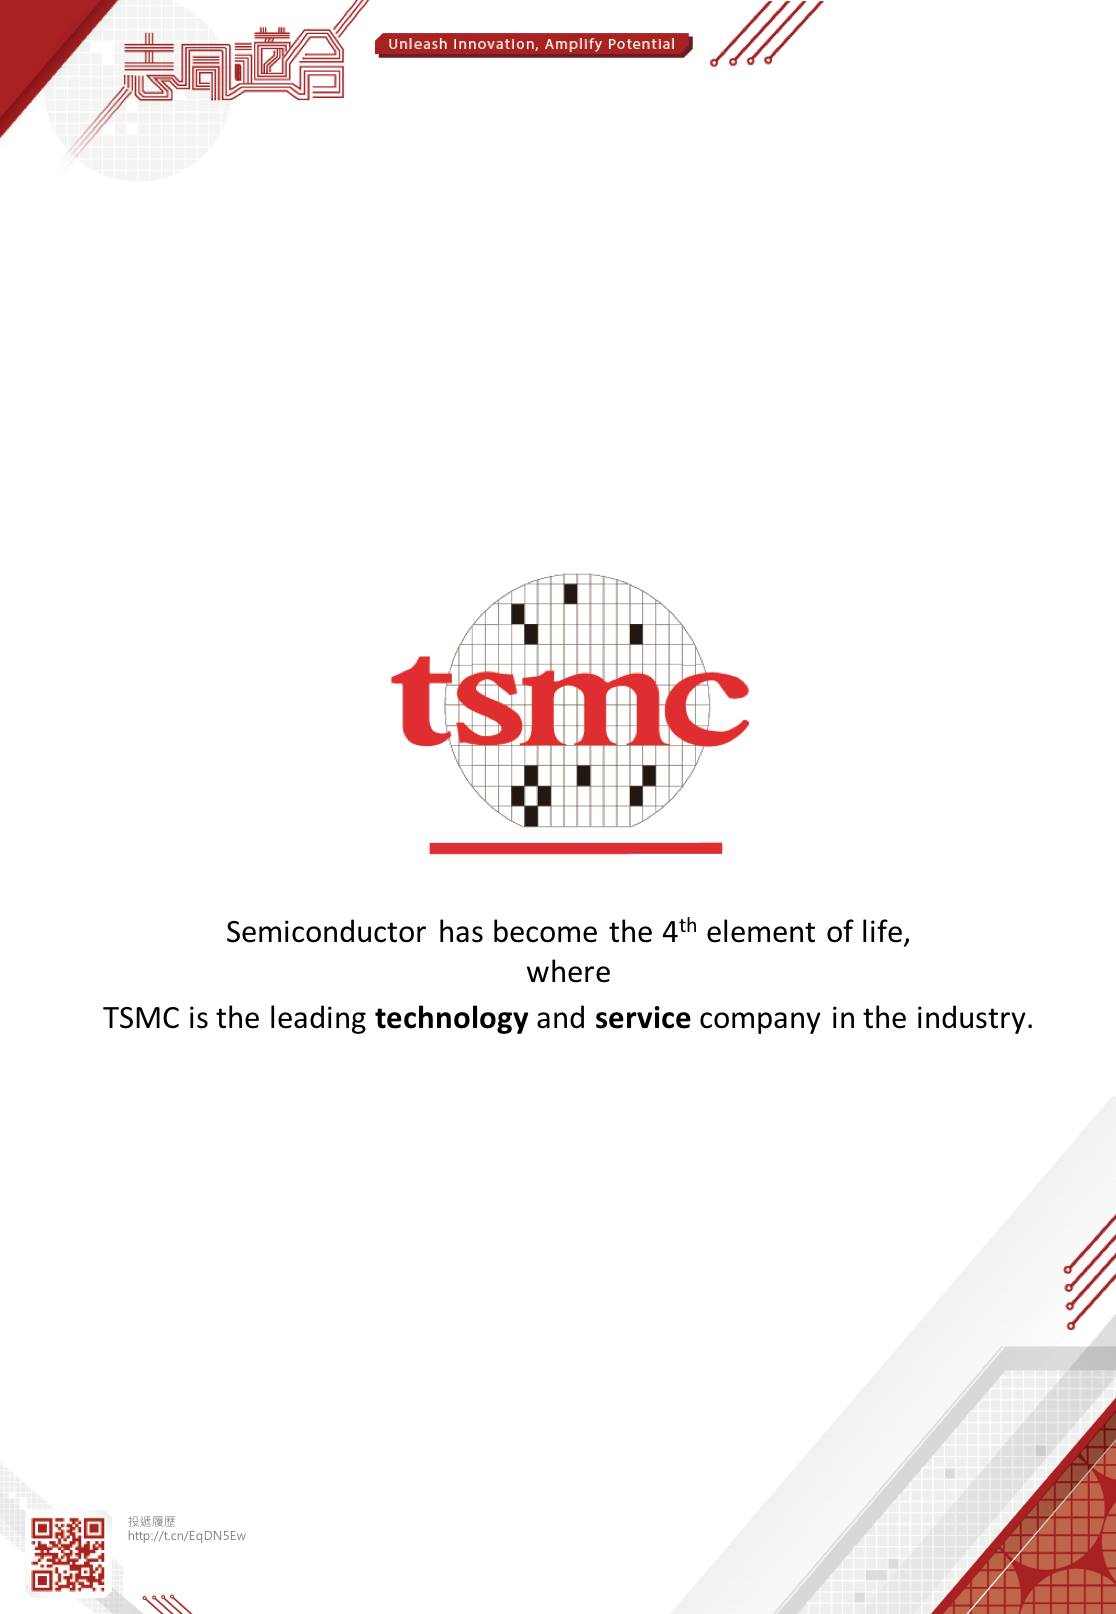 2019_TSMC_Campus_Recruitment_2nd_wave.jpg - 71.90 KB